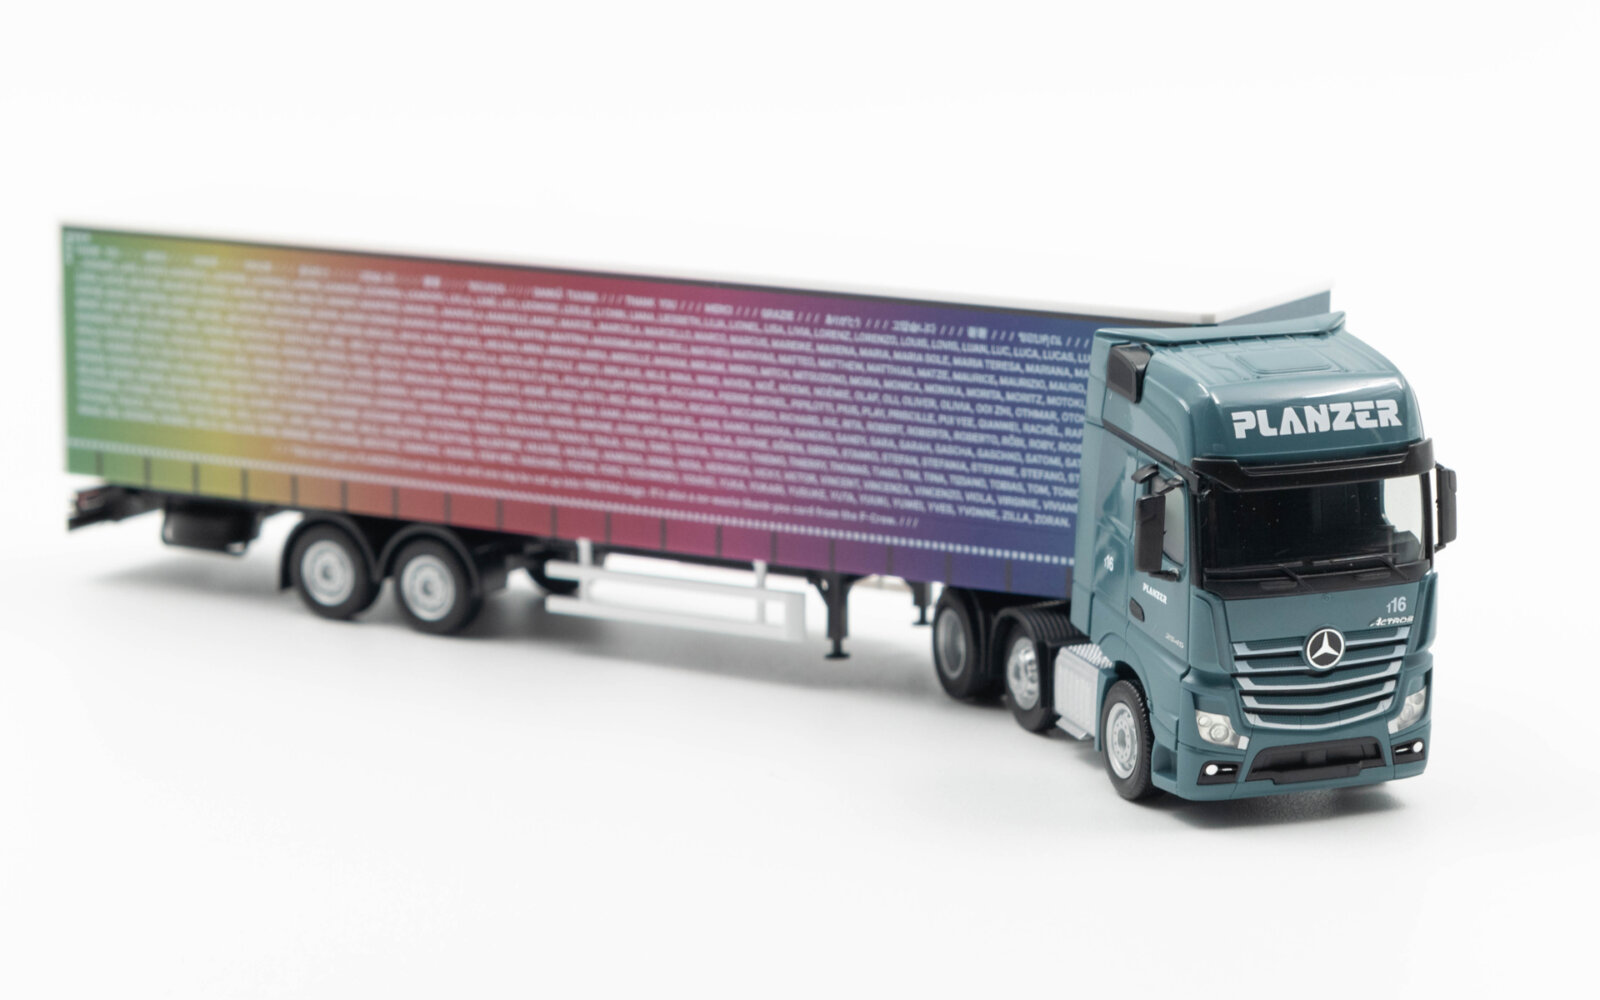 Freitag model truck 1:87 - Planzer